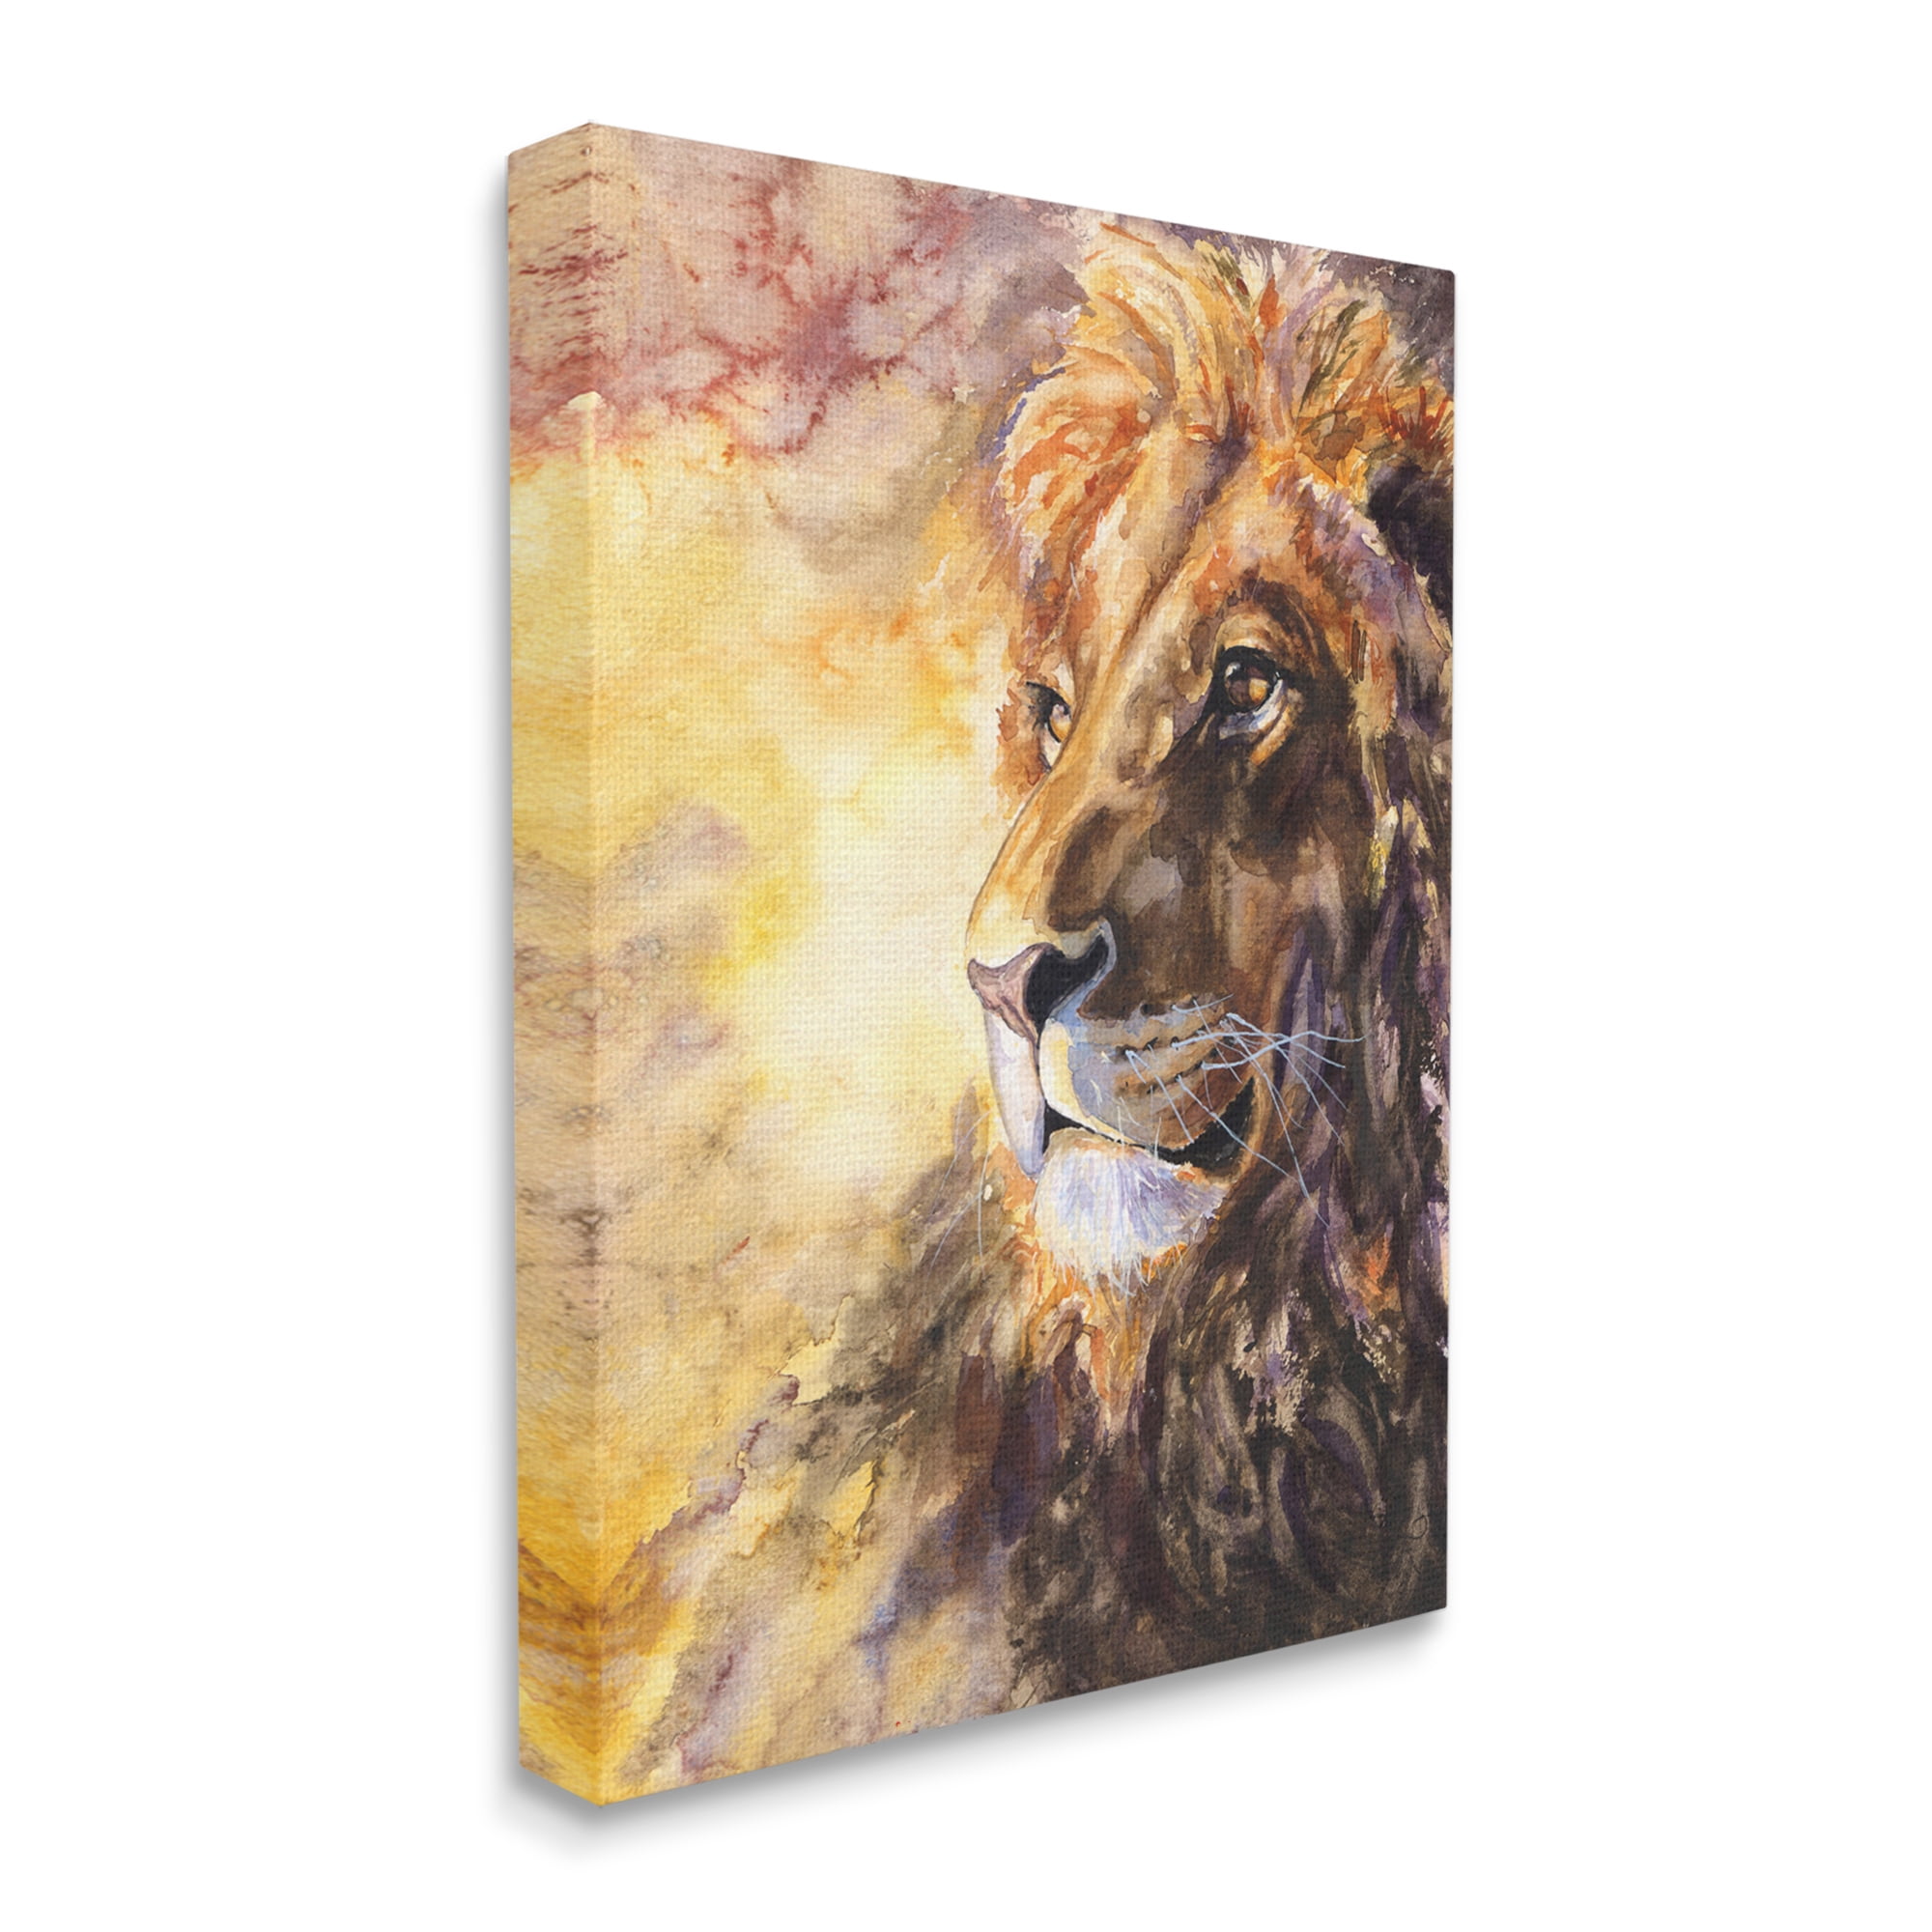 Lion Portrait Safari Wildlife Print 24x36 Thick Gallery Wrapped